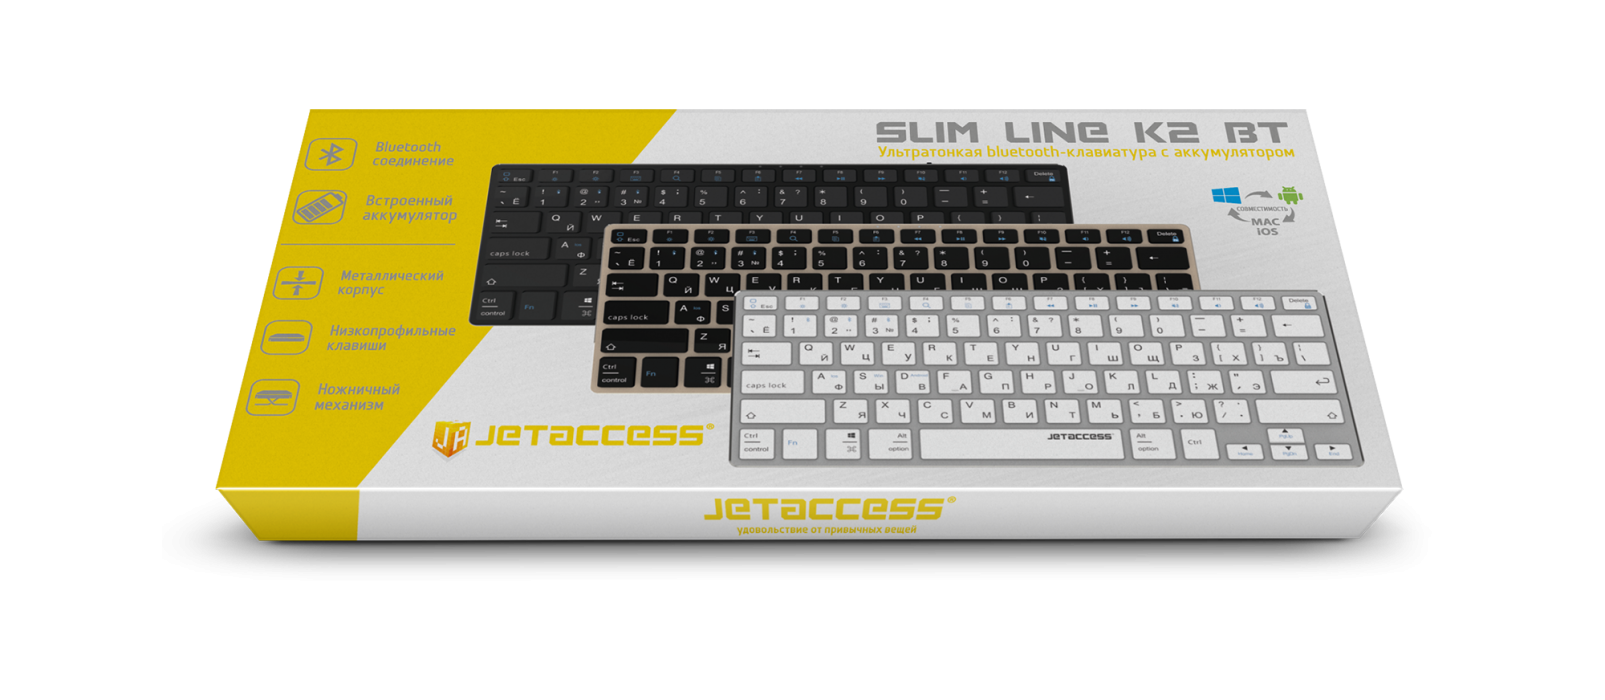 Ультратонкая bluetooth-клавиатура с аккумулятором SLIM LINE K2 BT7